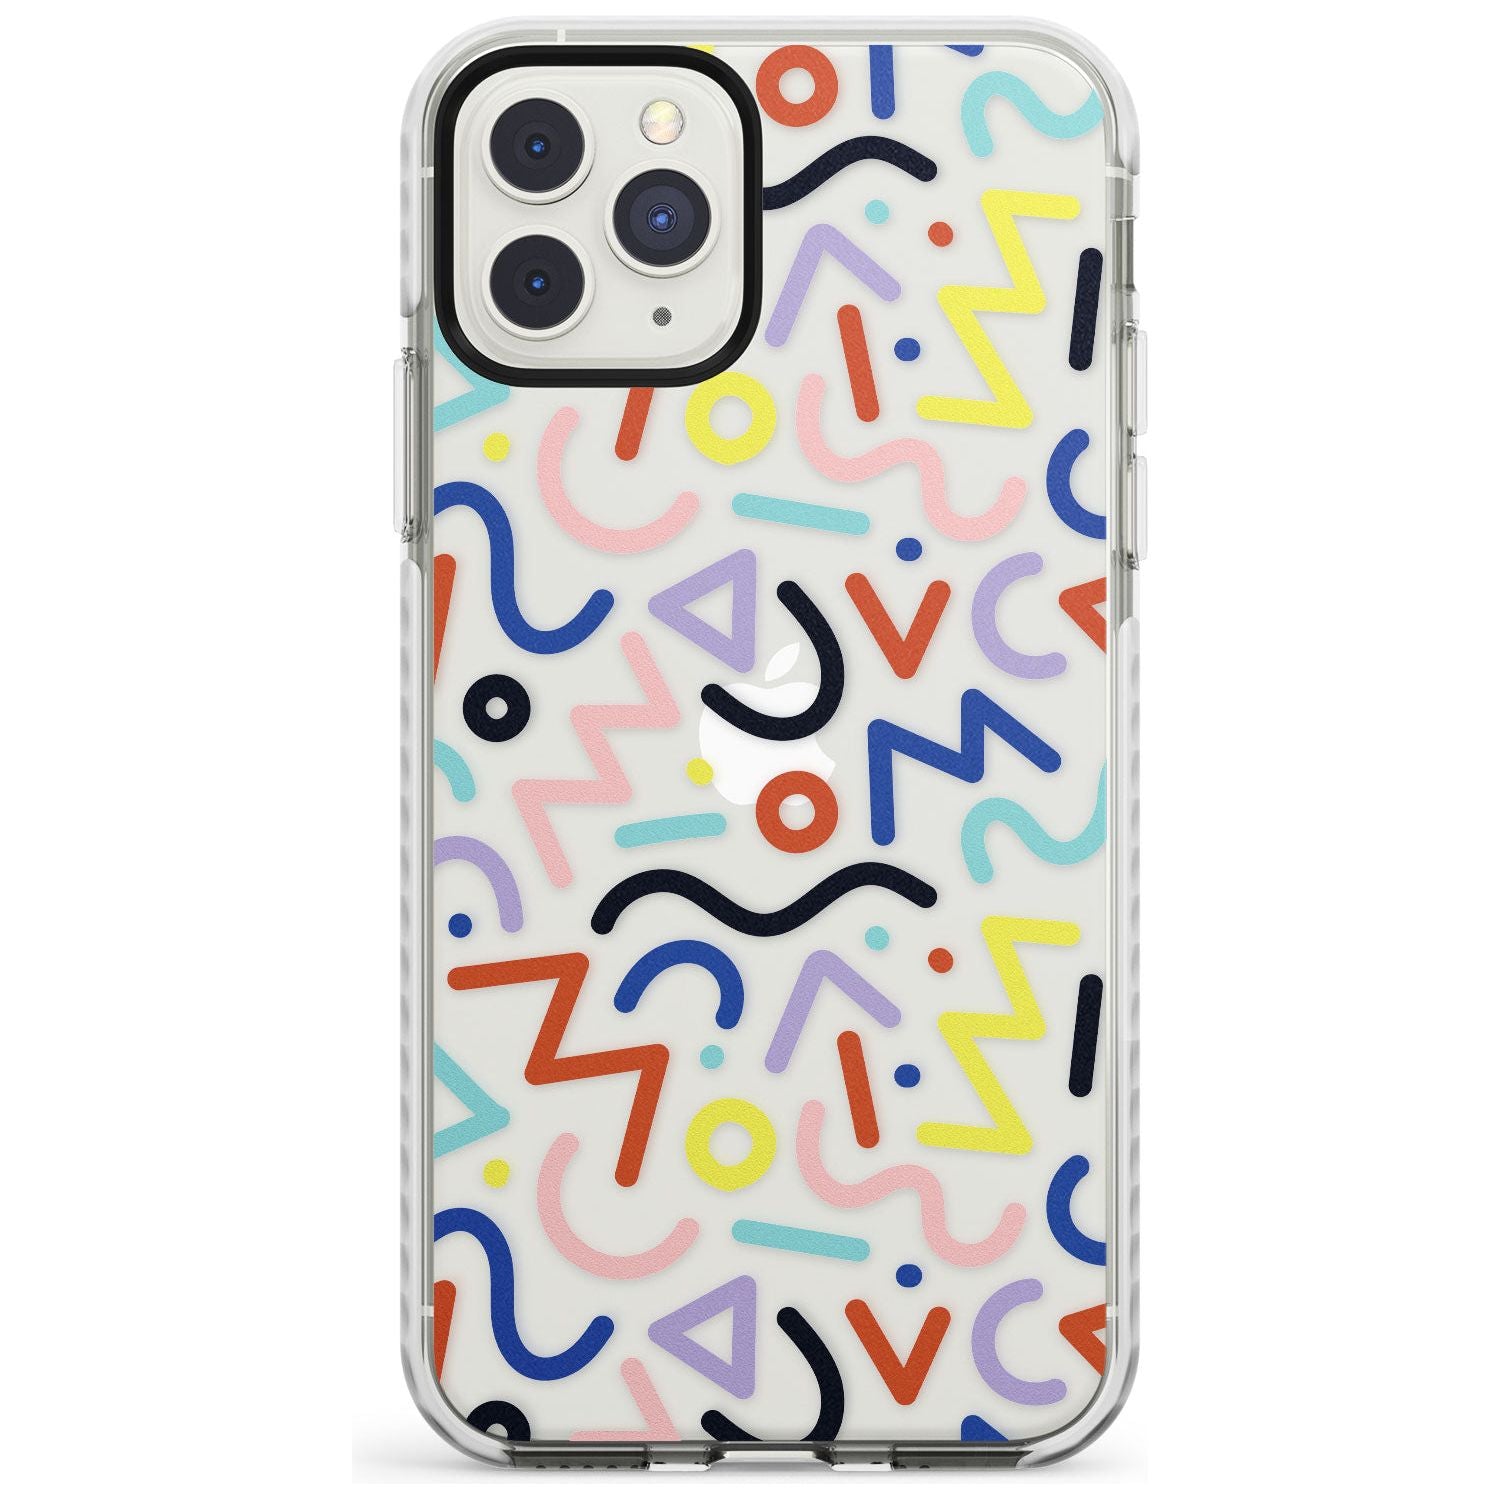 Colourful Squiggles Memphis Retro Pattern Design Impact Phone Case for iPhone 11 Pro Max